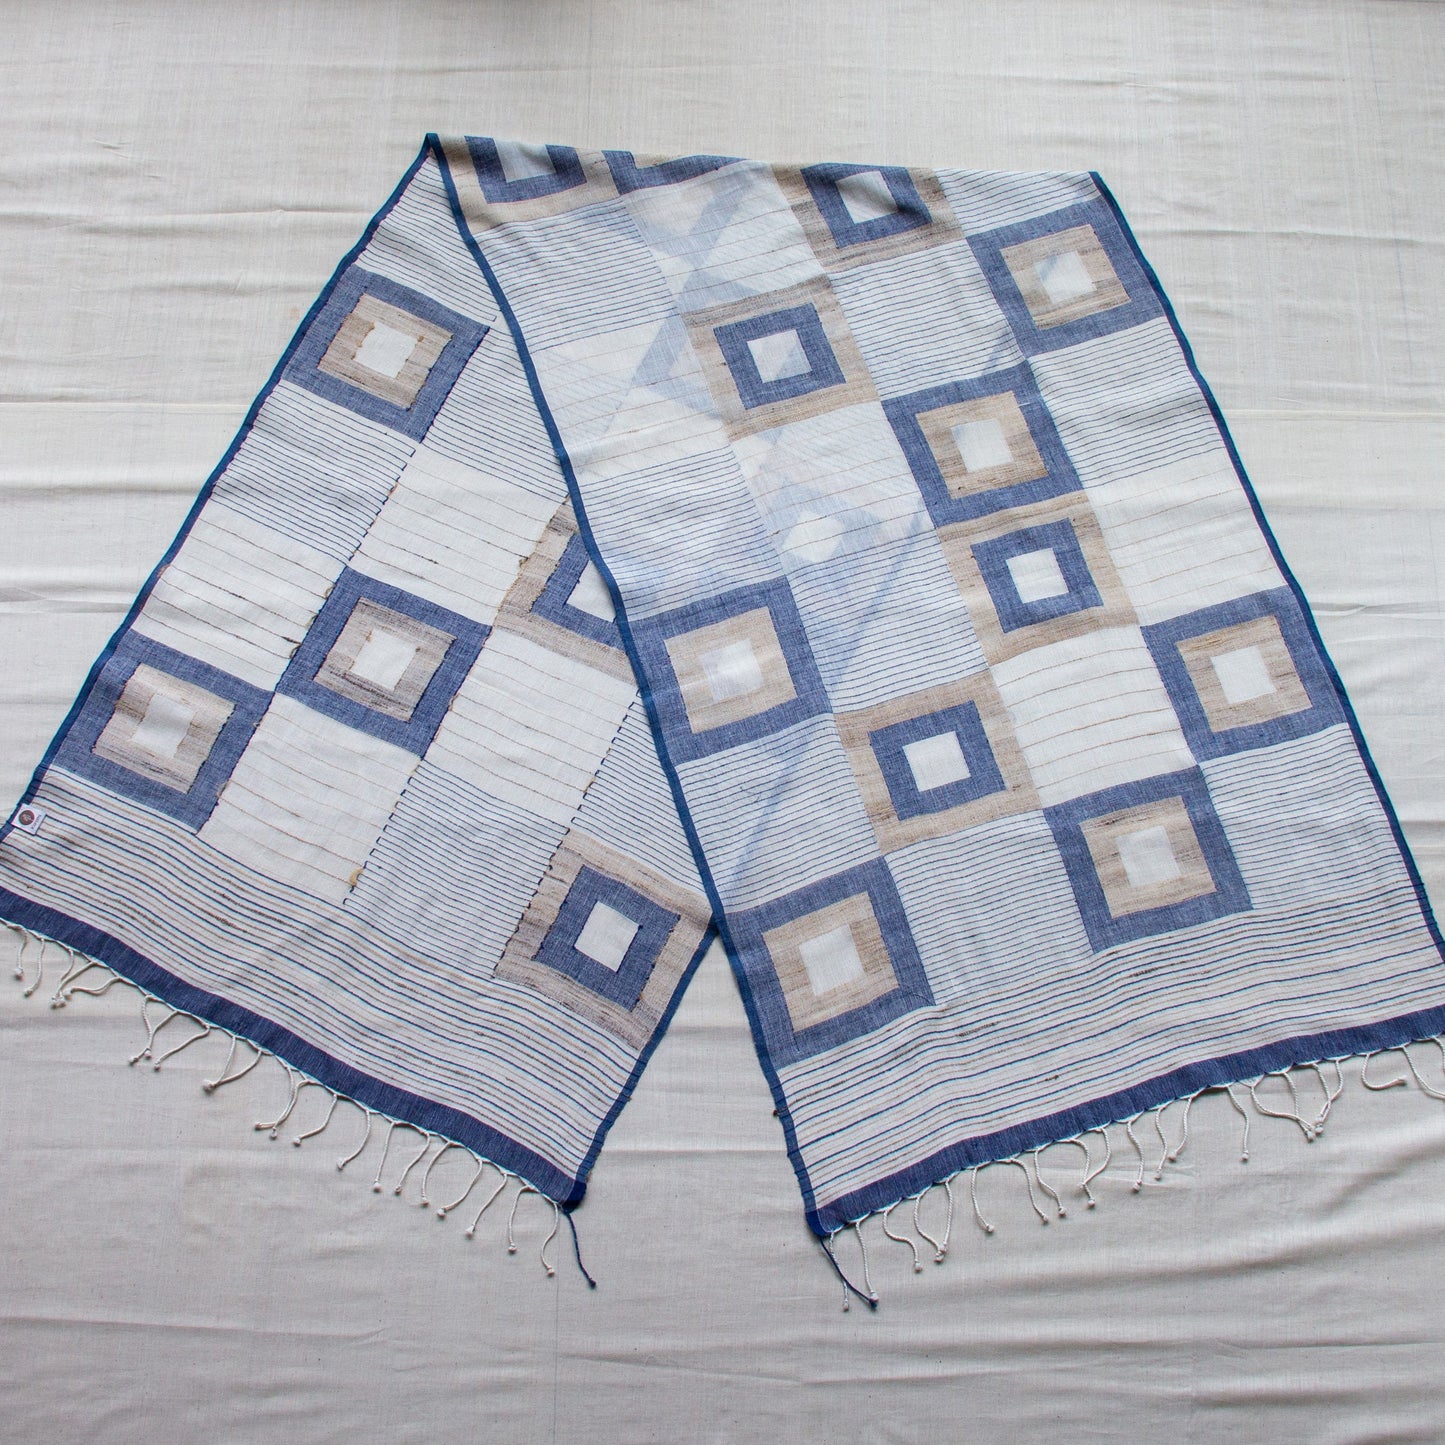 India, Karomi Crafts & Textiles, Off White Double Square Jamdani Stole